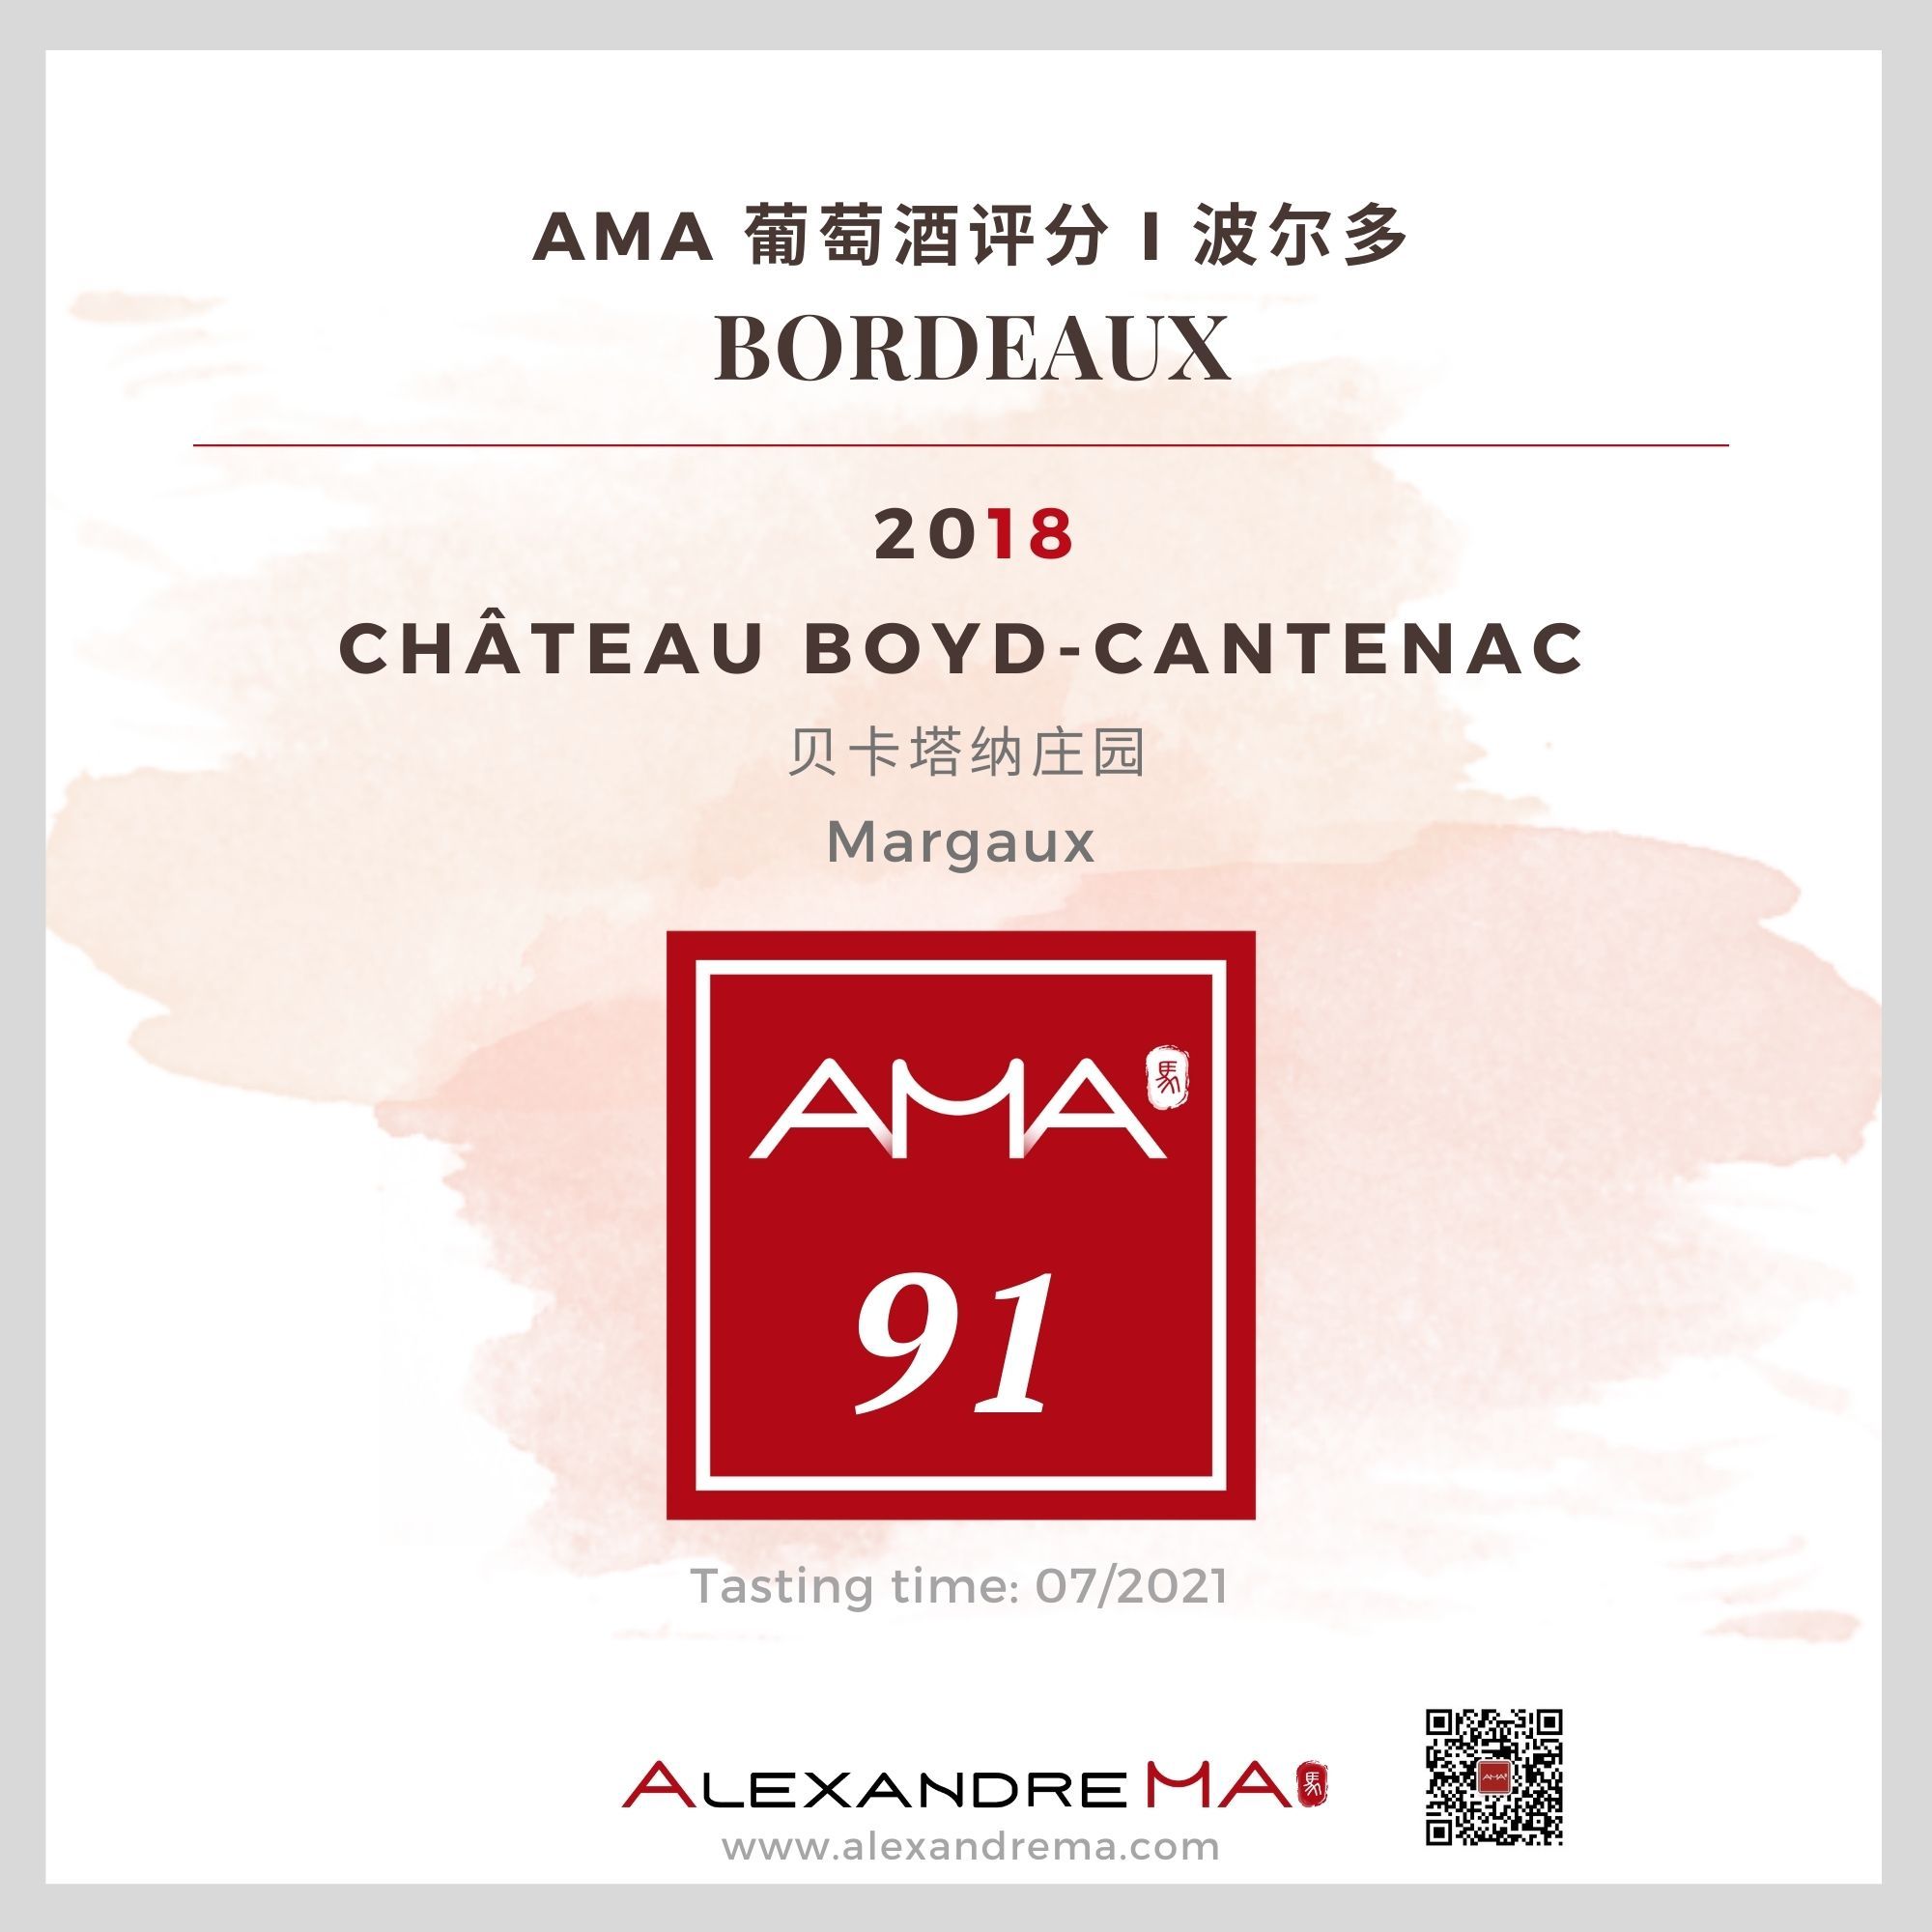 Château Boyd-Cantenac 2018 贝卡塔纳庄园 - Alexandre Ma